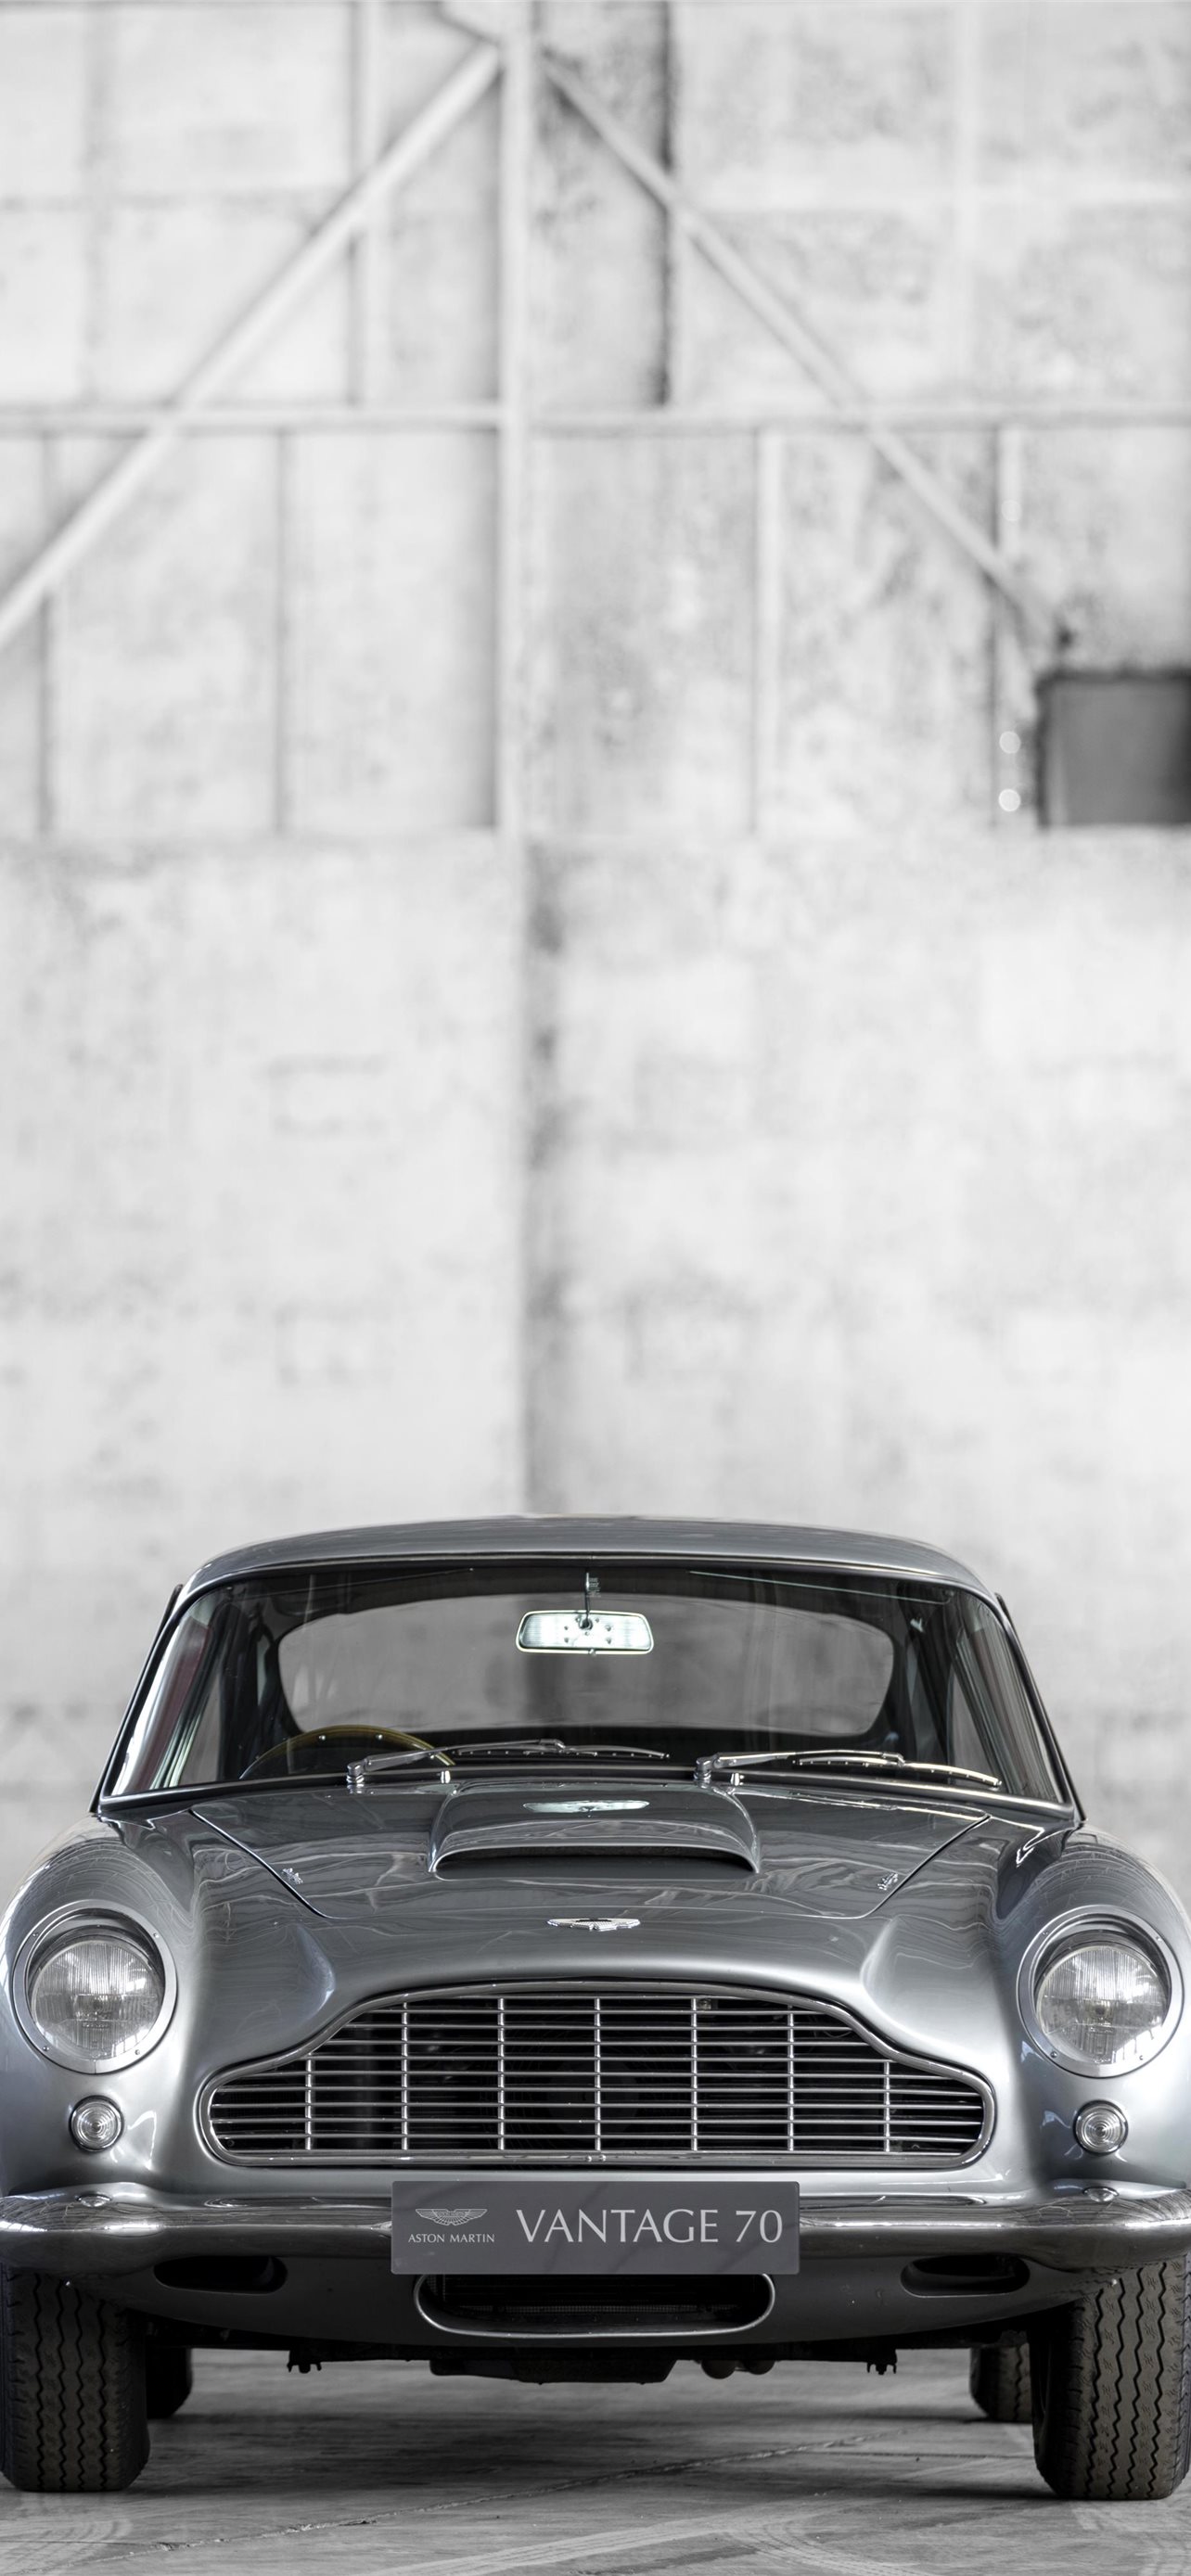 Aston Martin Db5 Wallpapers